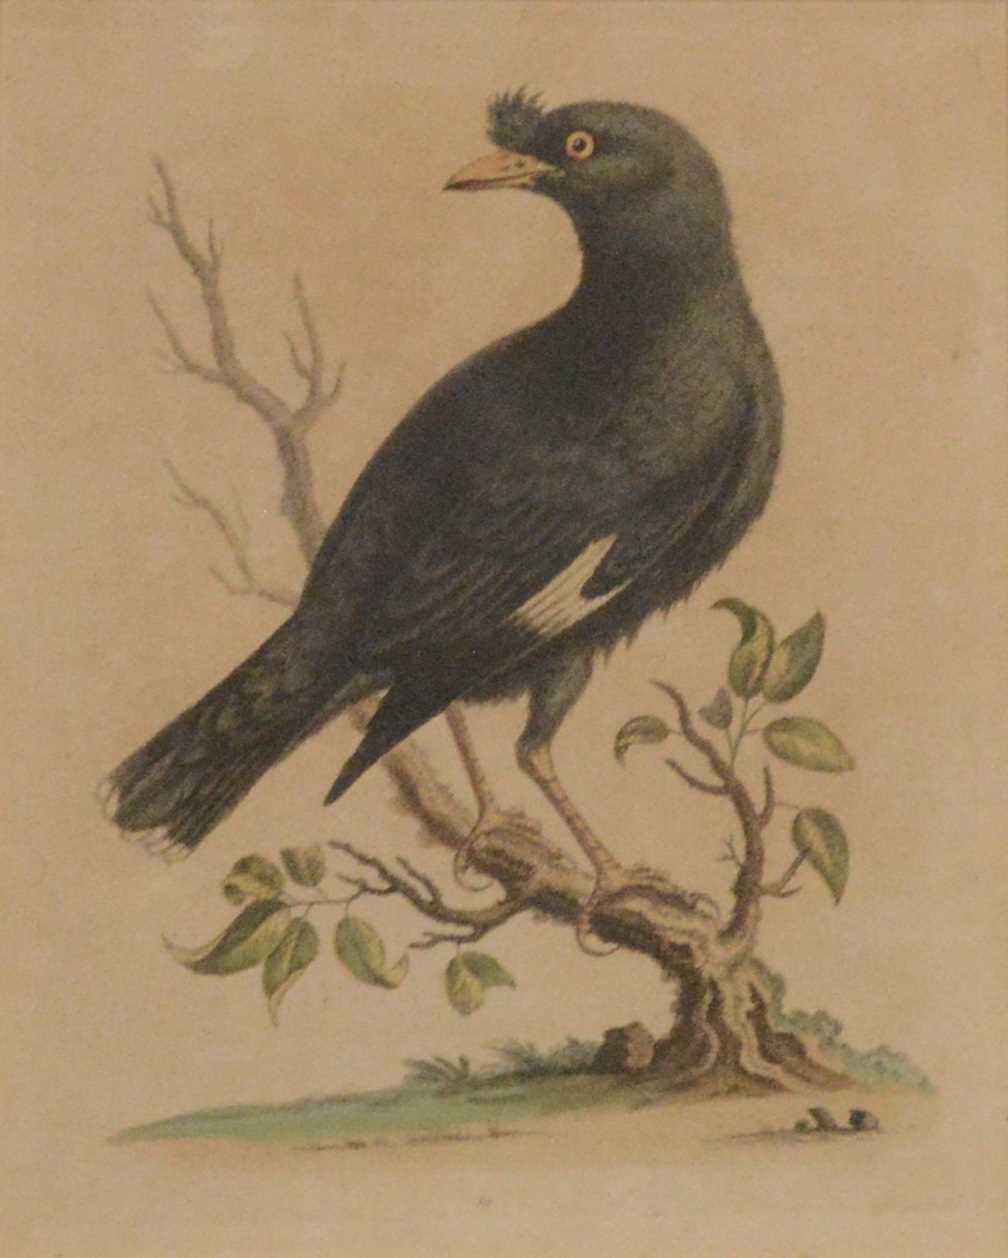 After George Edwards, fourteen ornithological bird prints,